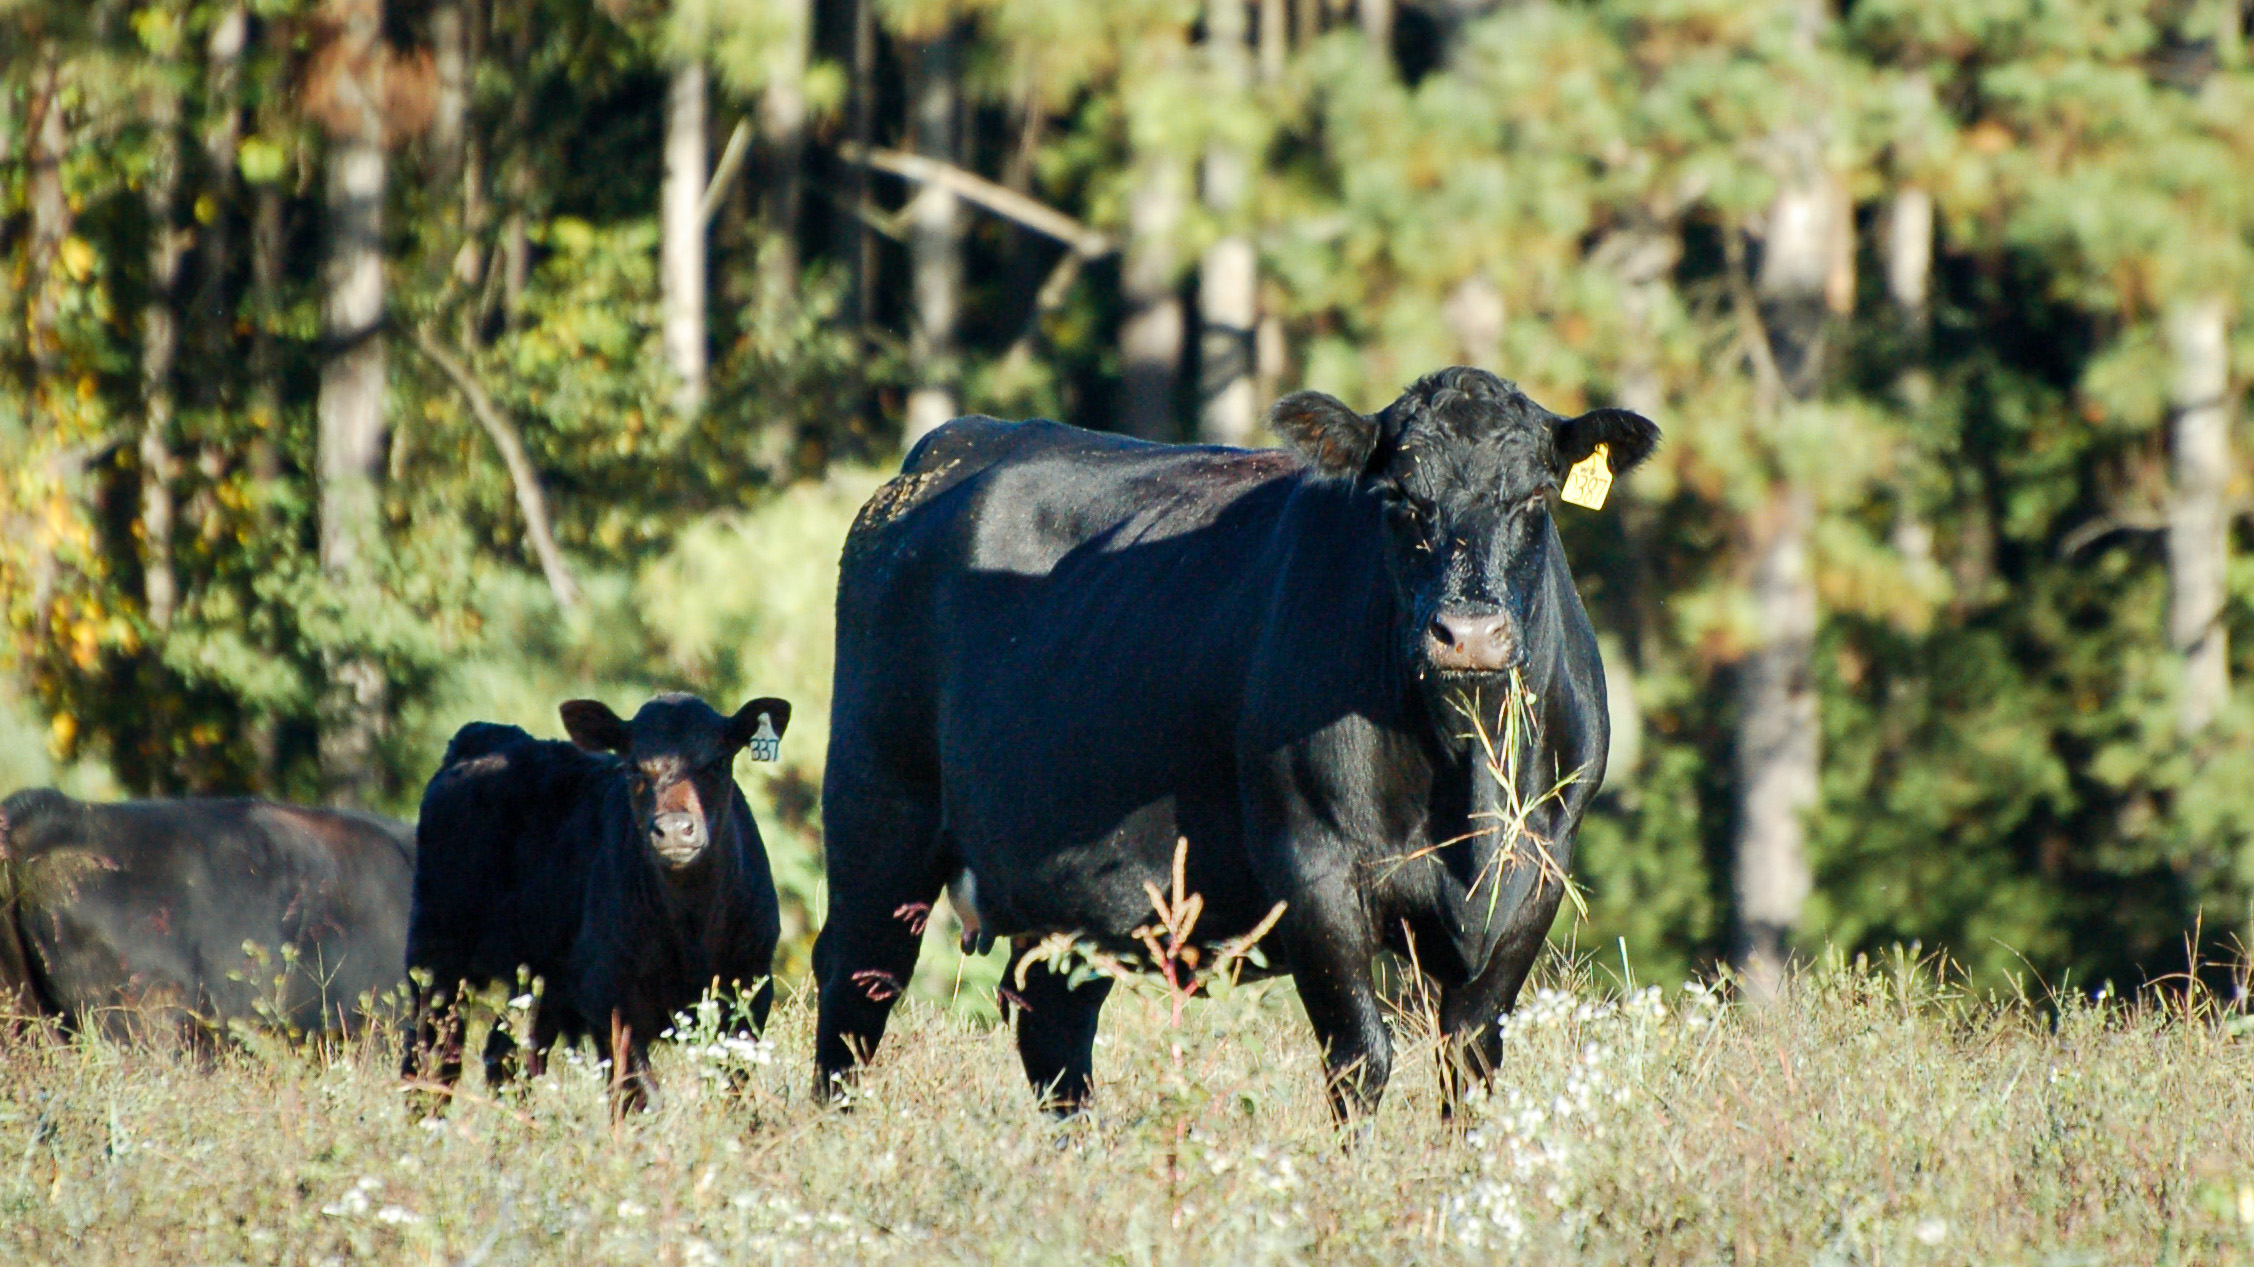 Cow-calf pair in the pasture